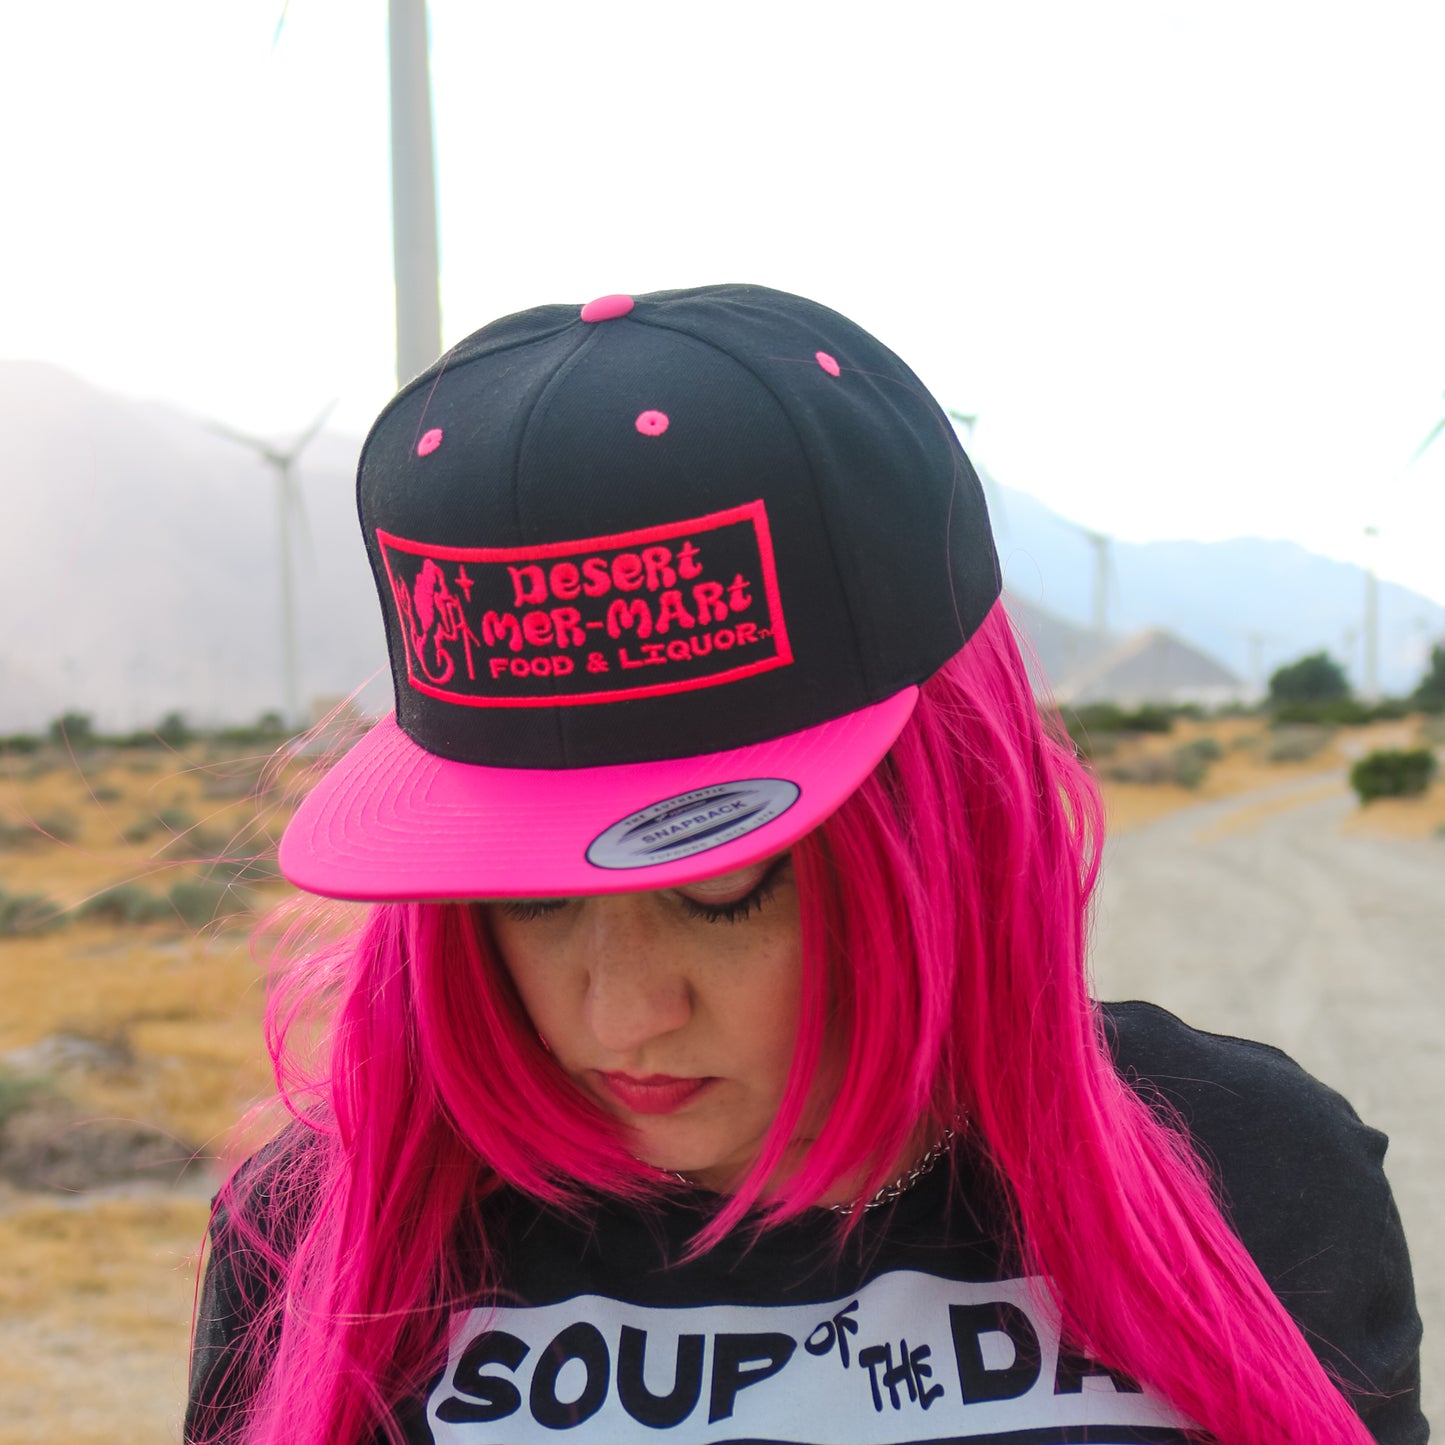 Desert Mer-Mart Food and Liquor Black and Pink Snapback Hat